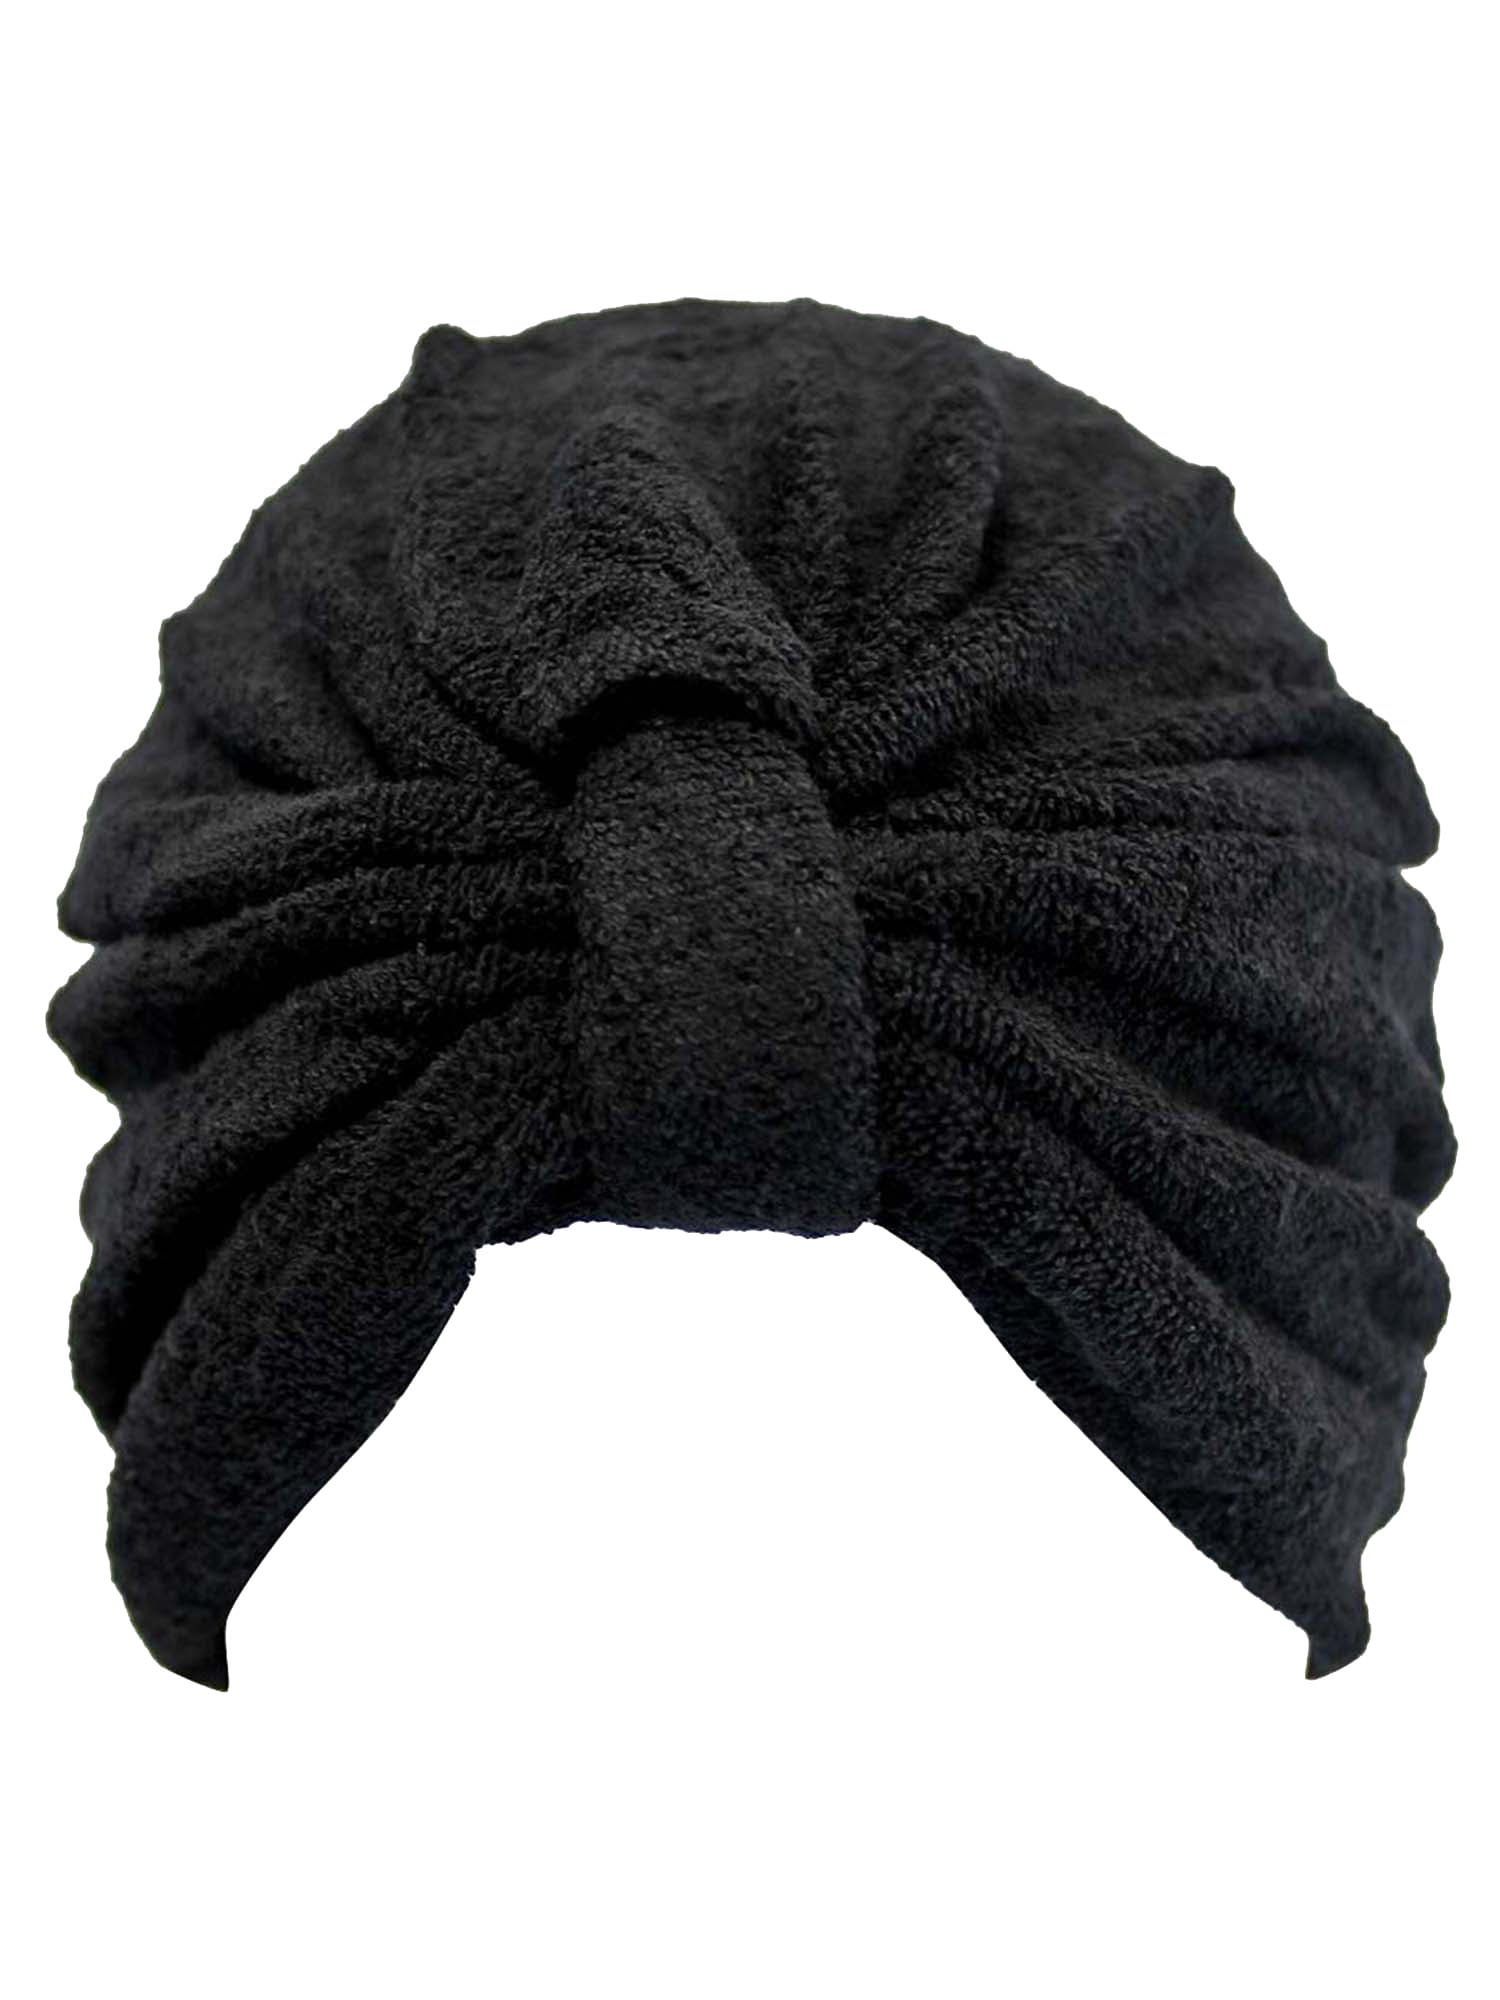 Black Soft Terry Cloth Turban Head Wrap 